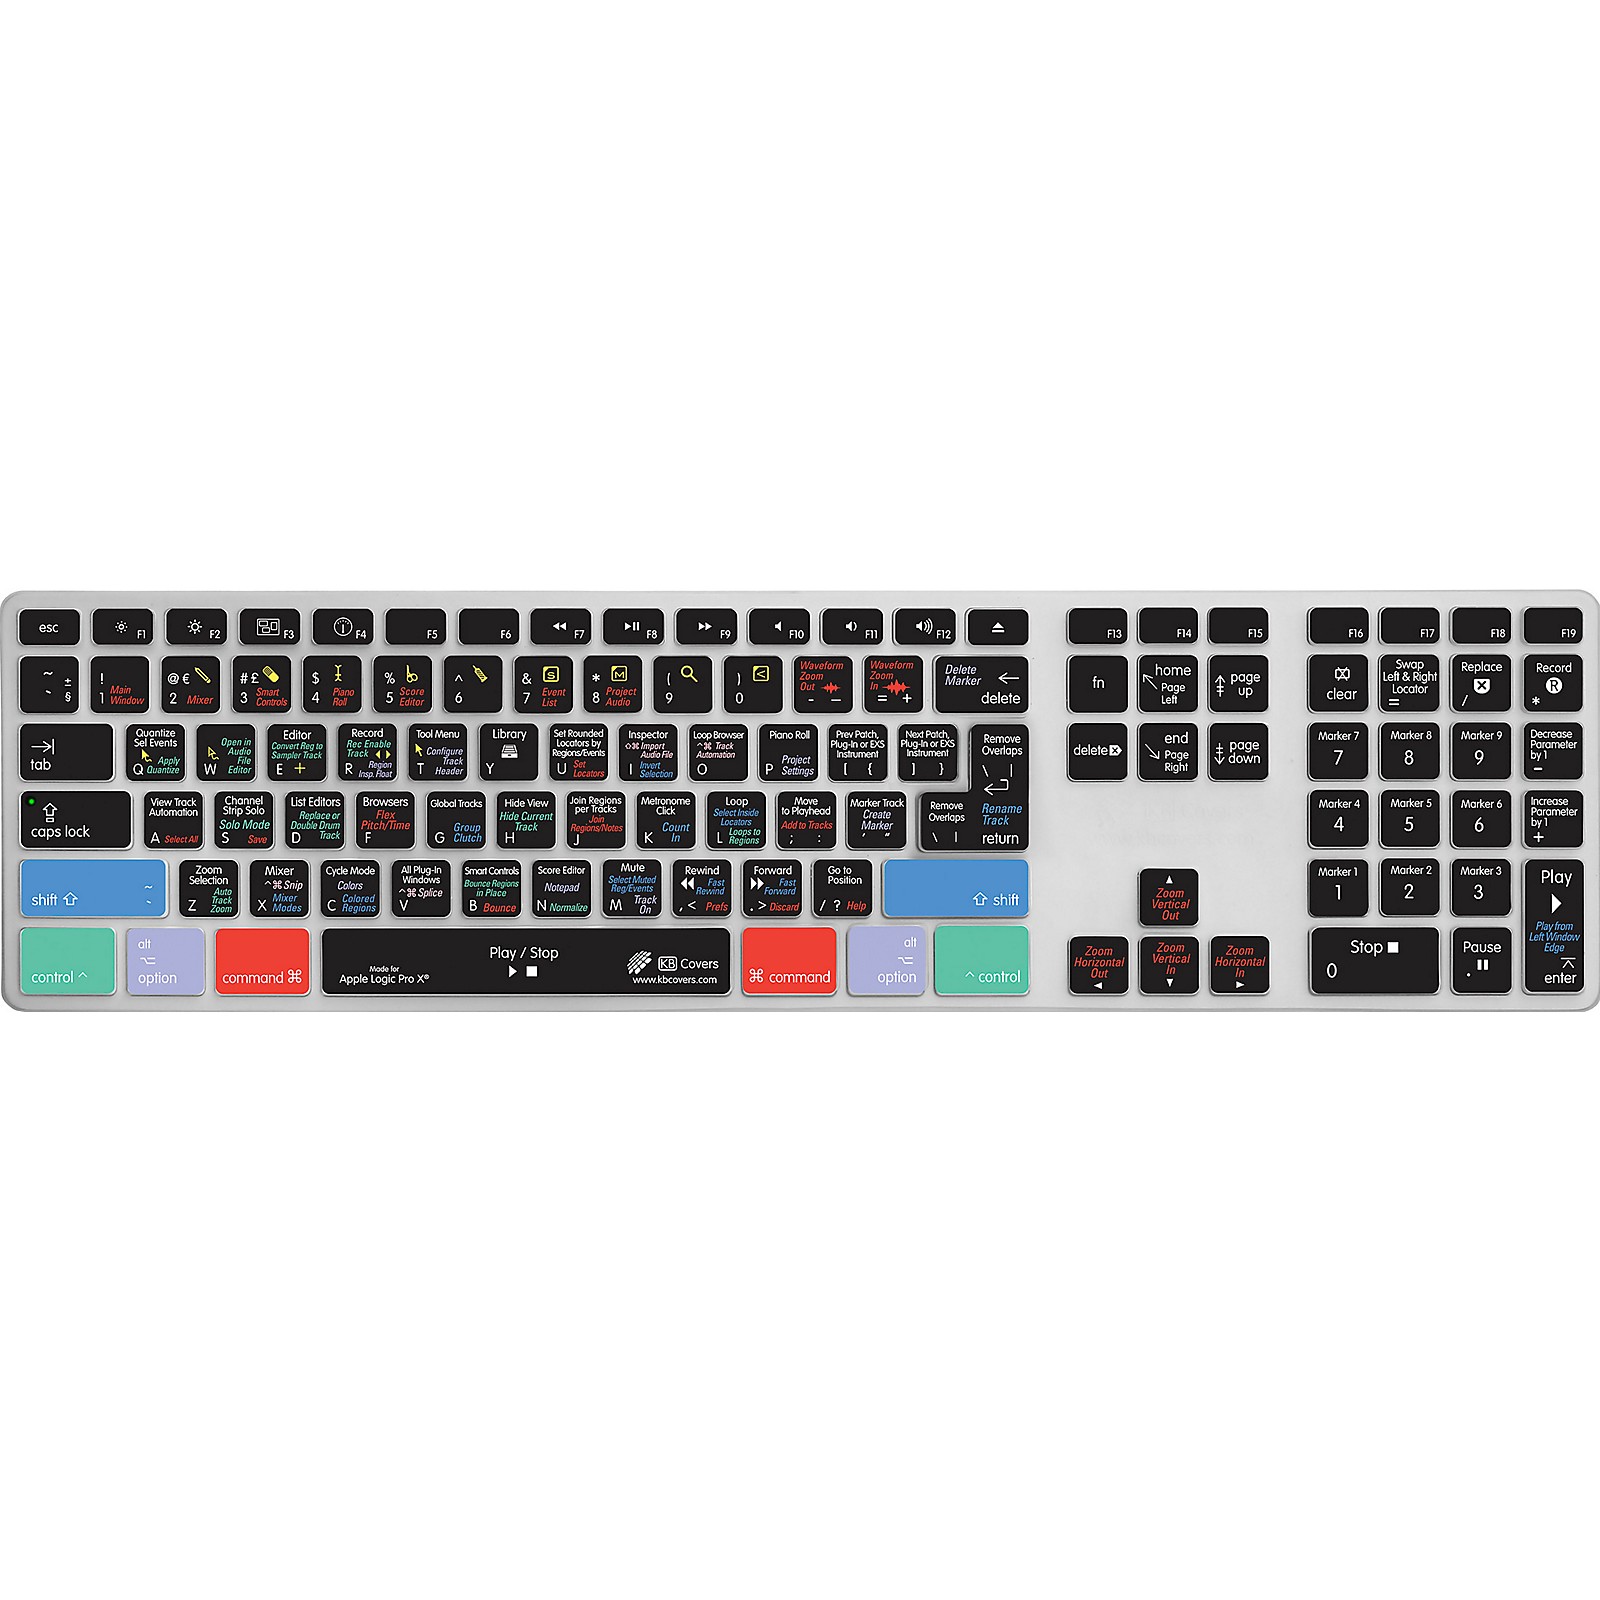 connect midi keyboard to macbook pro logic x